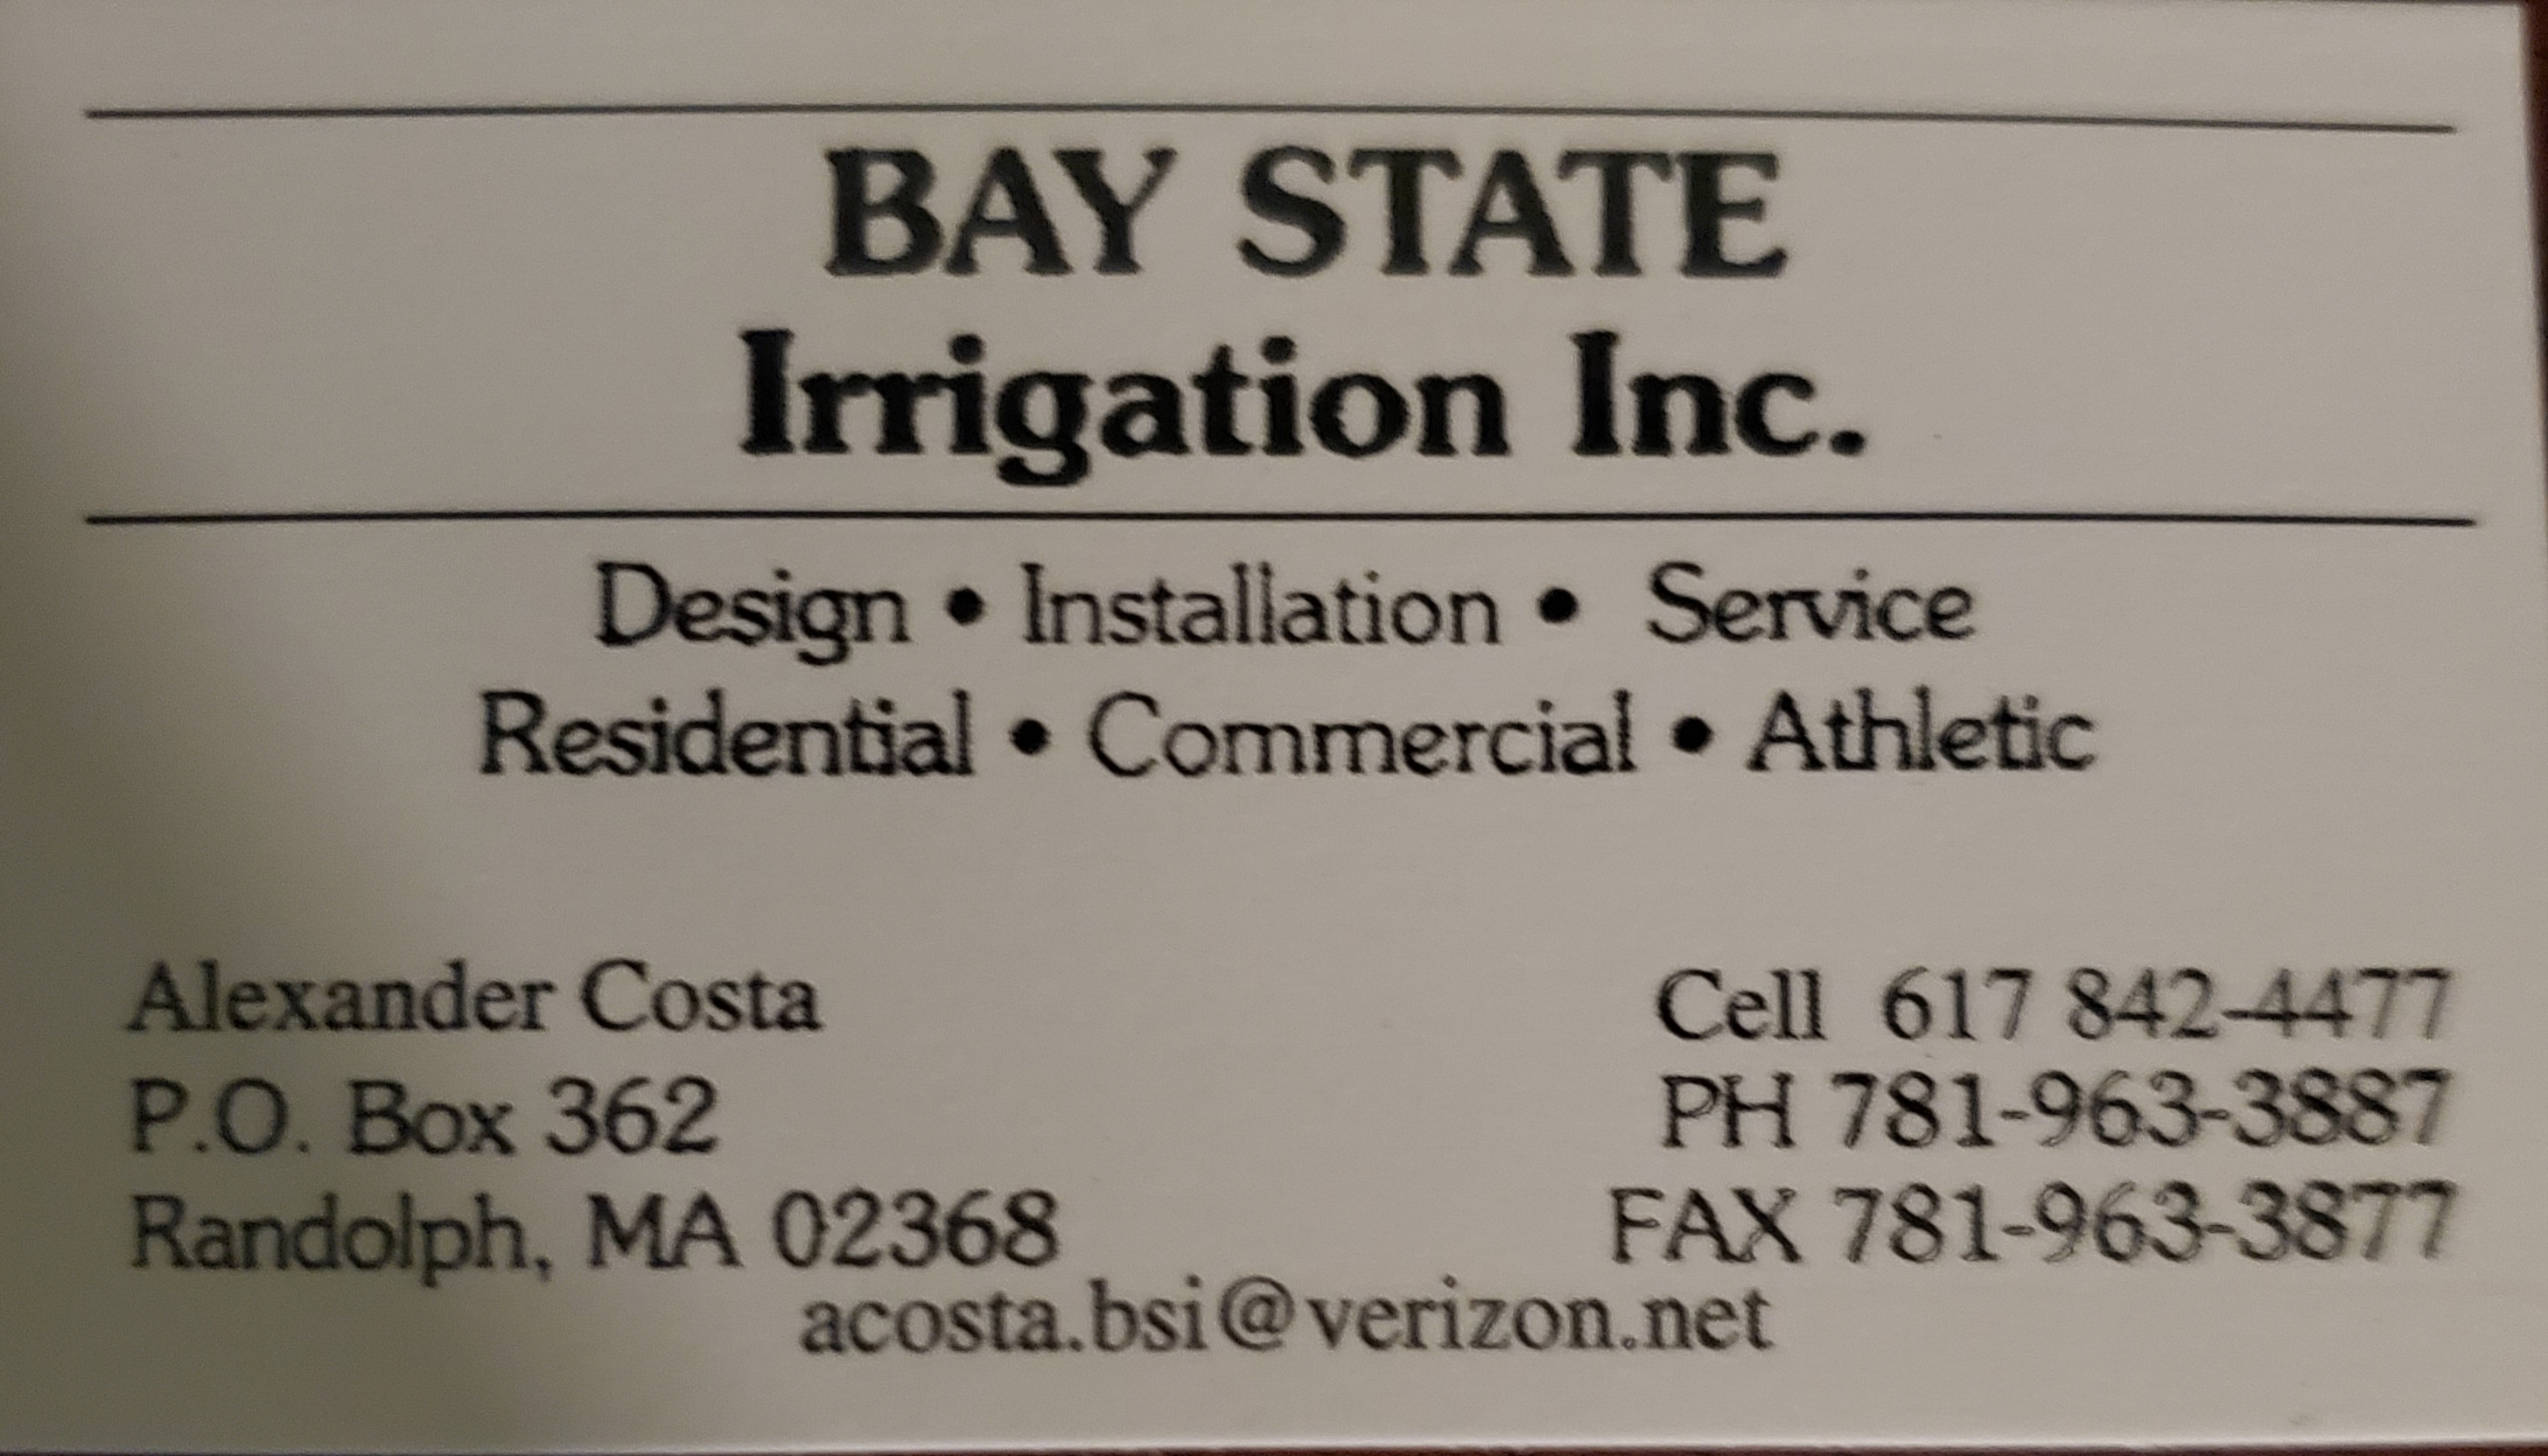 Bay State Irrigation Inc.